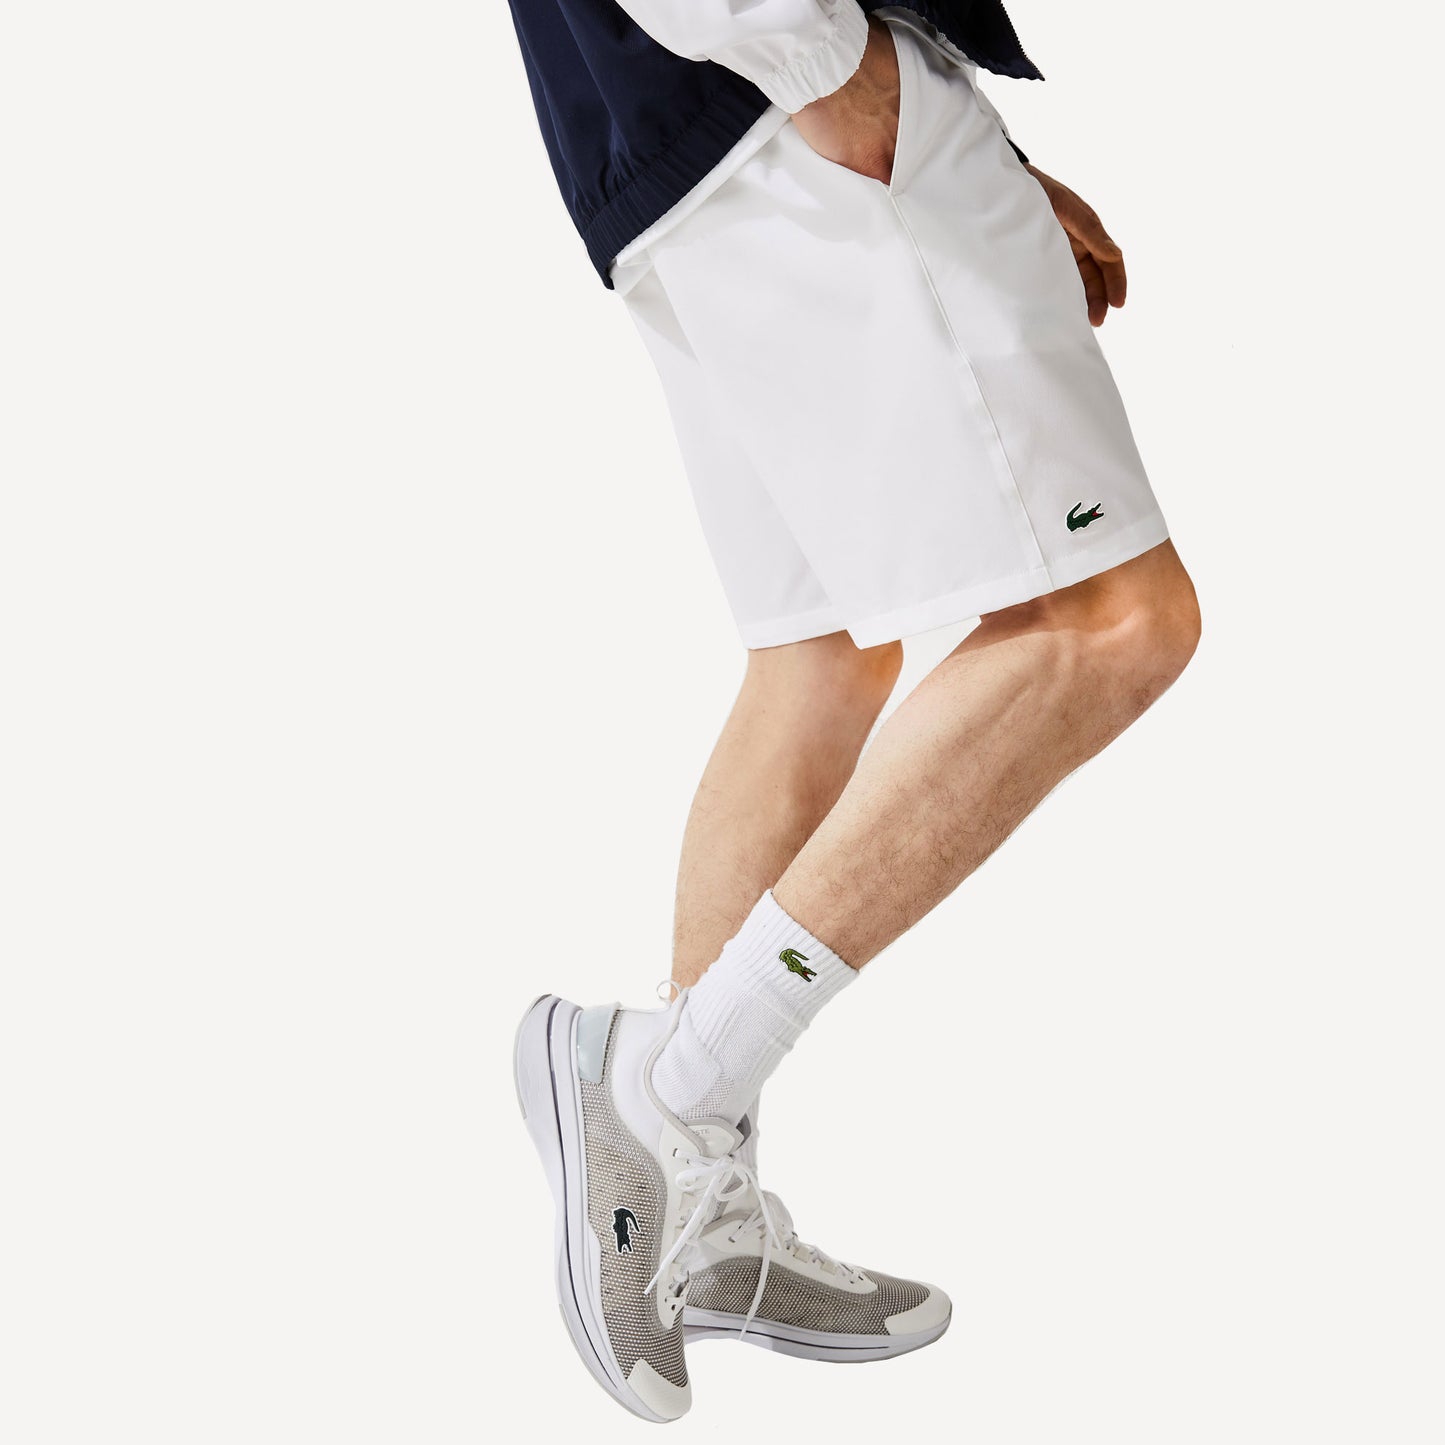 Lacoste Men's Tennis Shorts White (2)